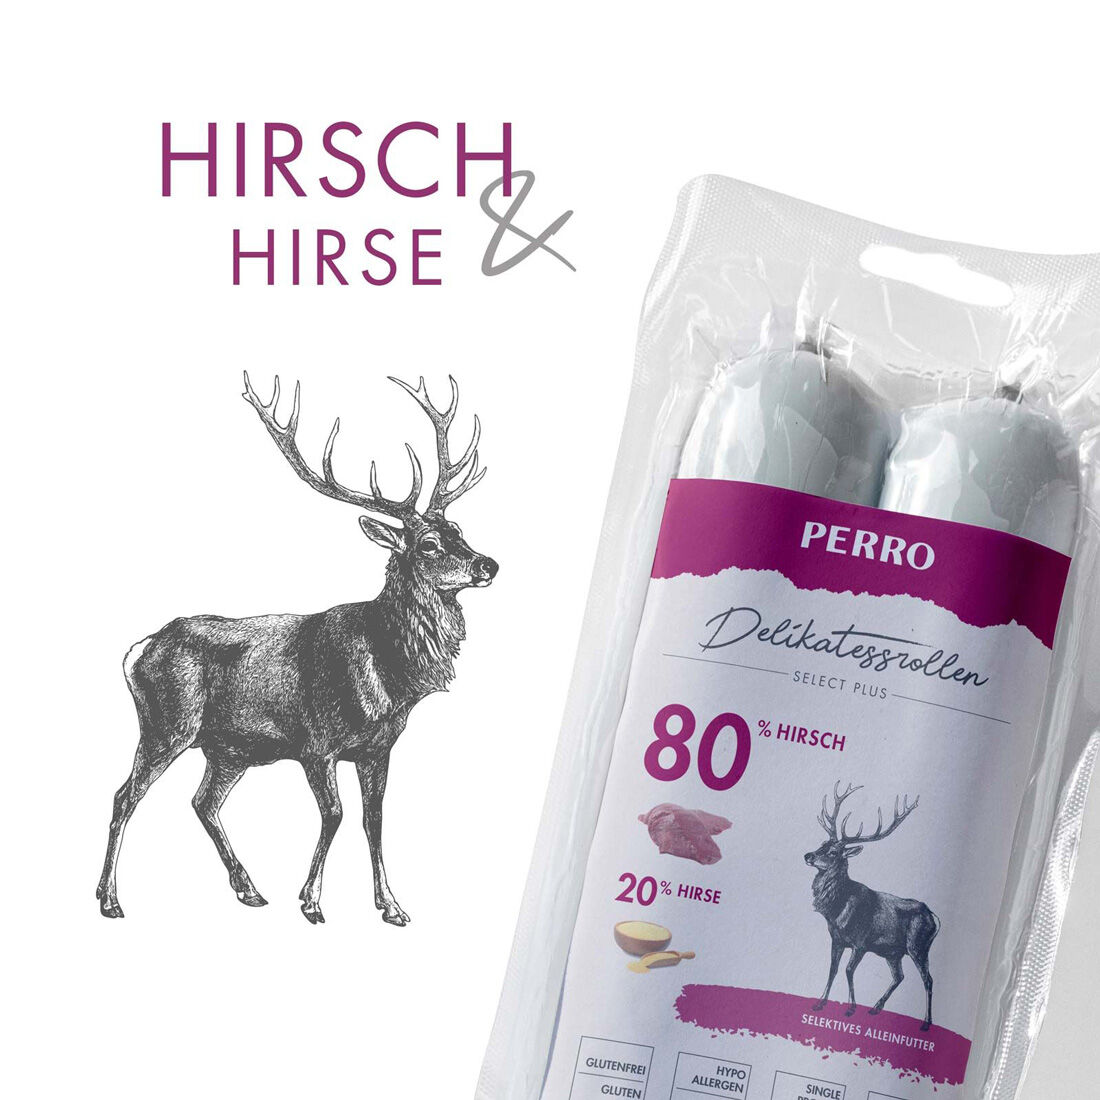 PERRO-Delikatessrolle-Hirsch-Hirse-Hundewurst-Alleinfutter-181594